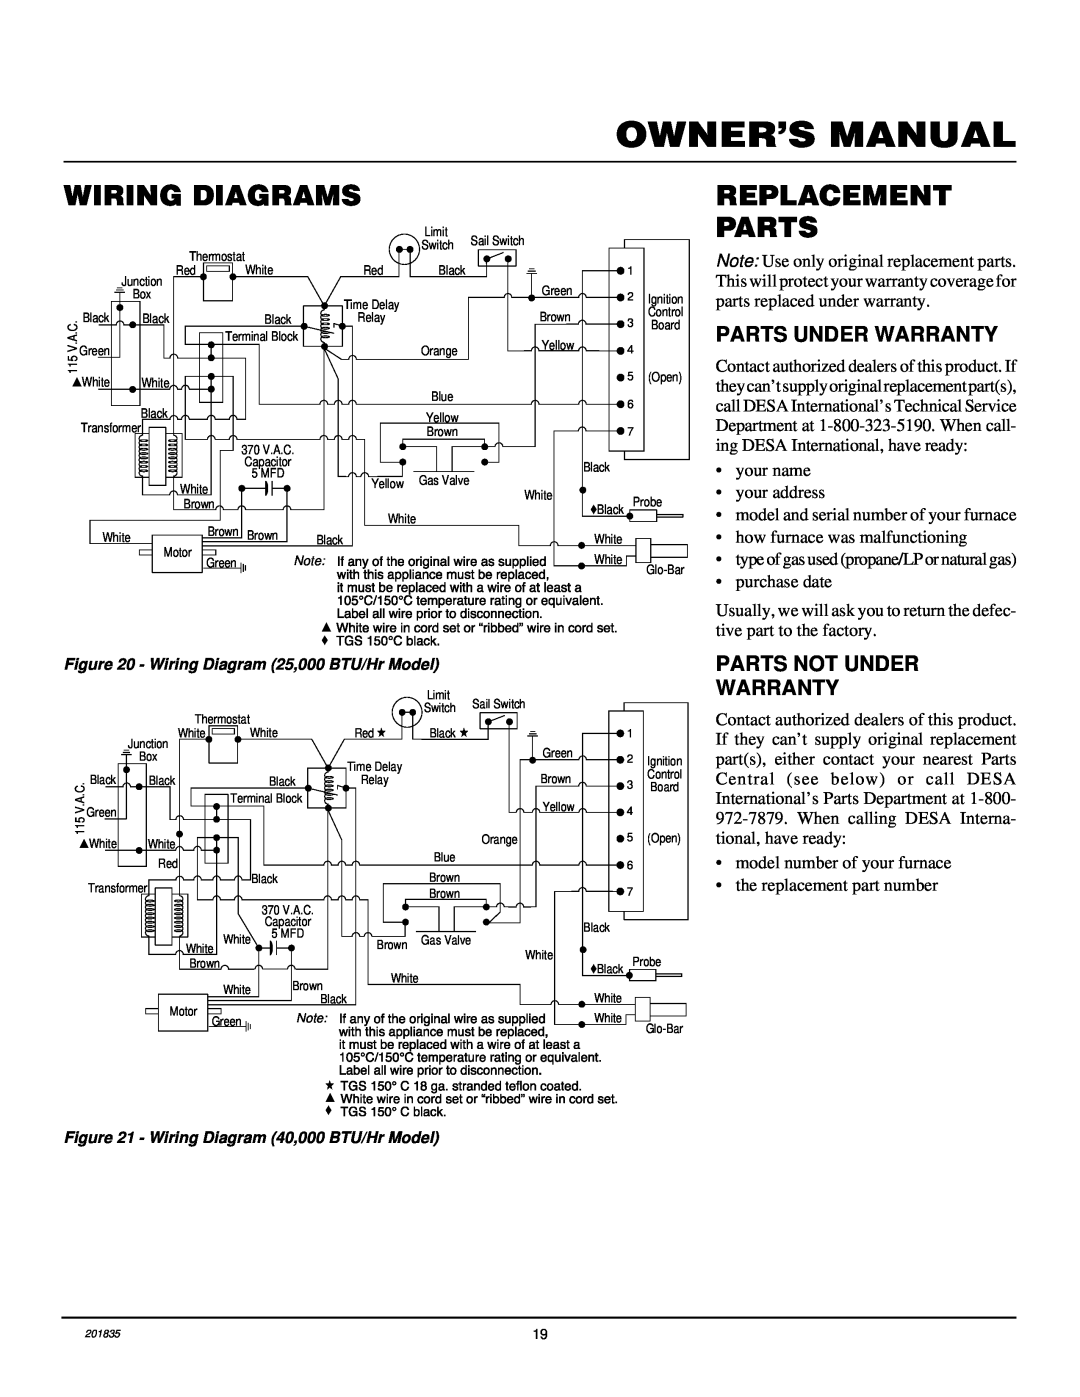 Desa DNV25NB, DNV40NB installation manual Wiring Diagrams, Replacement, Parts Under Warranty, Parts Not Under Warranty 